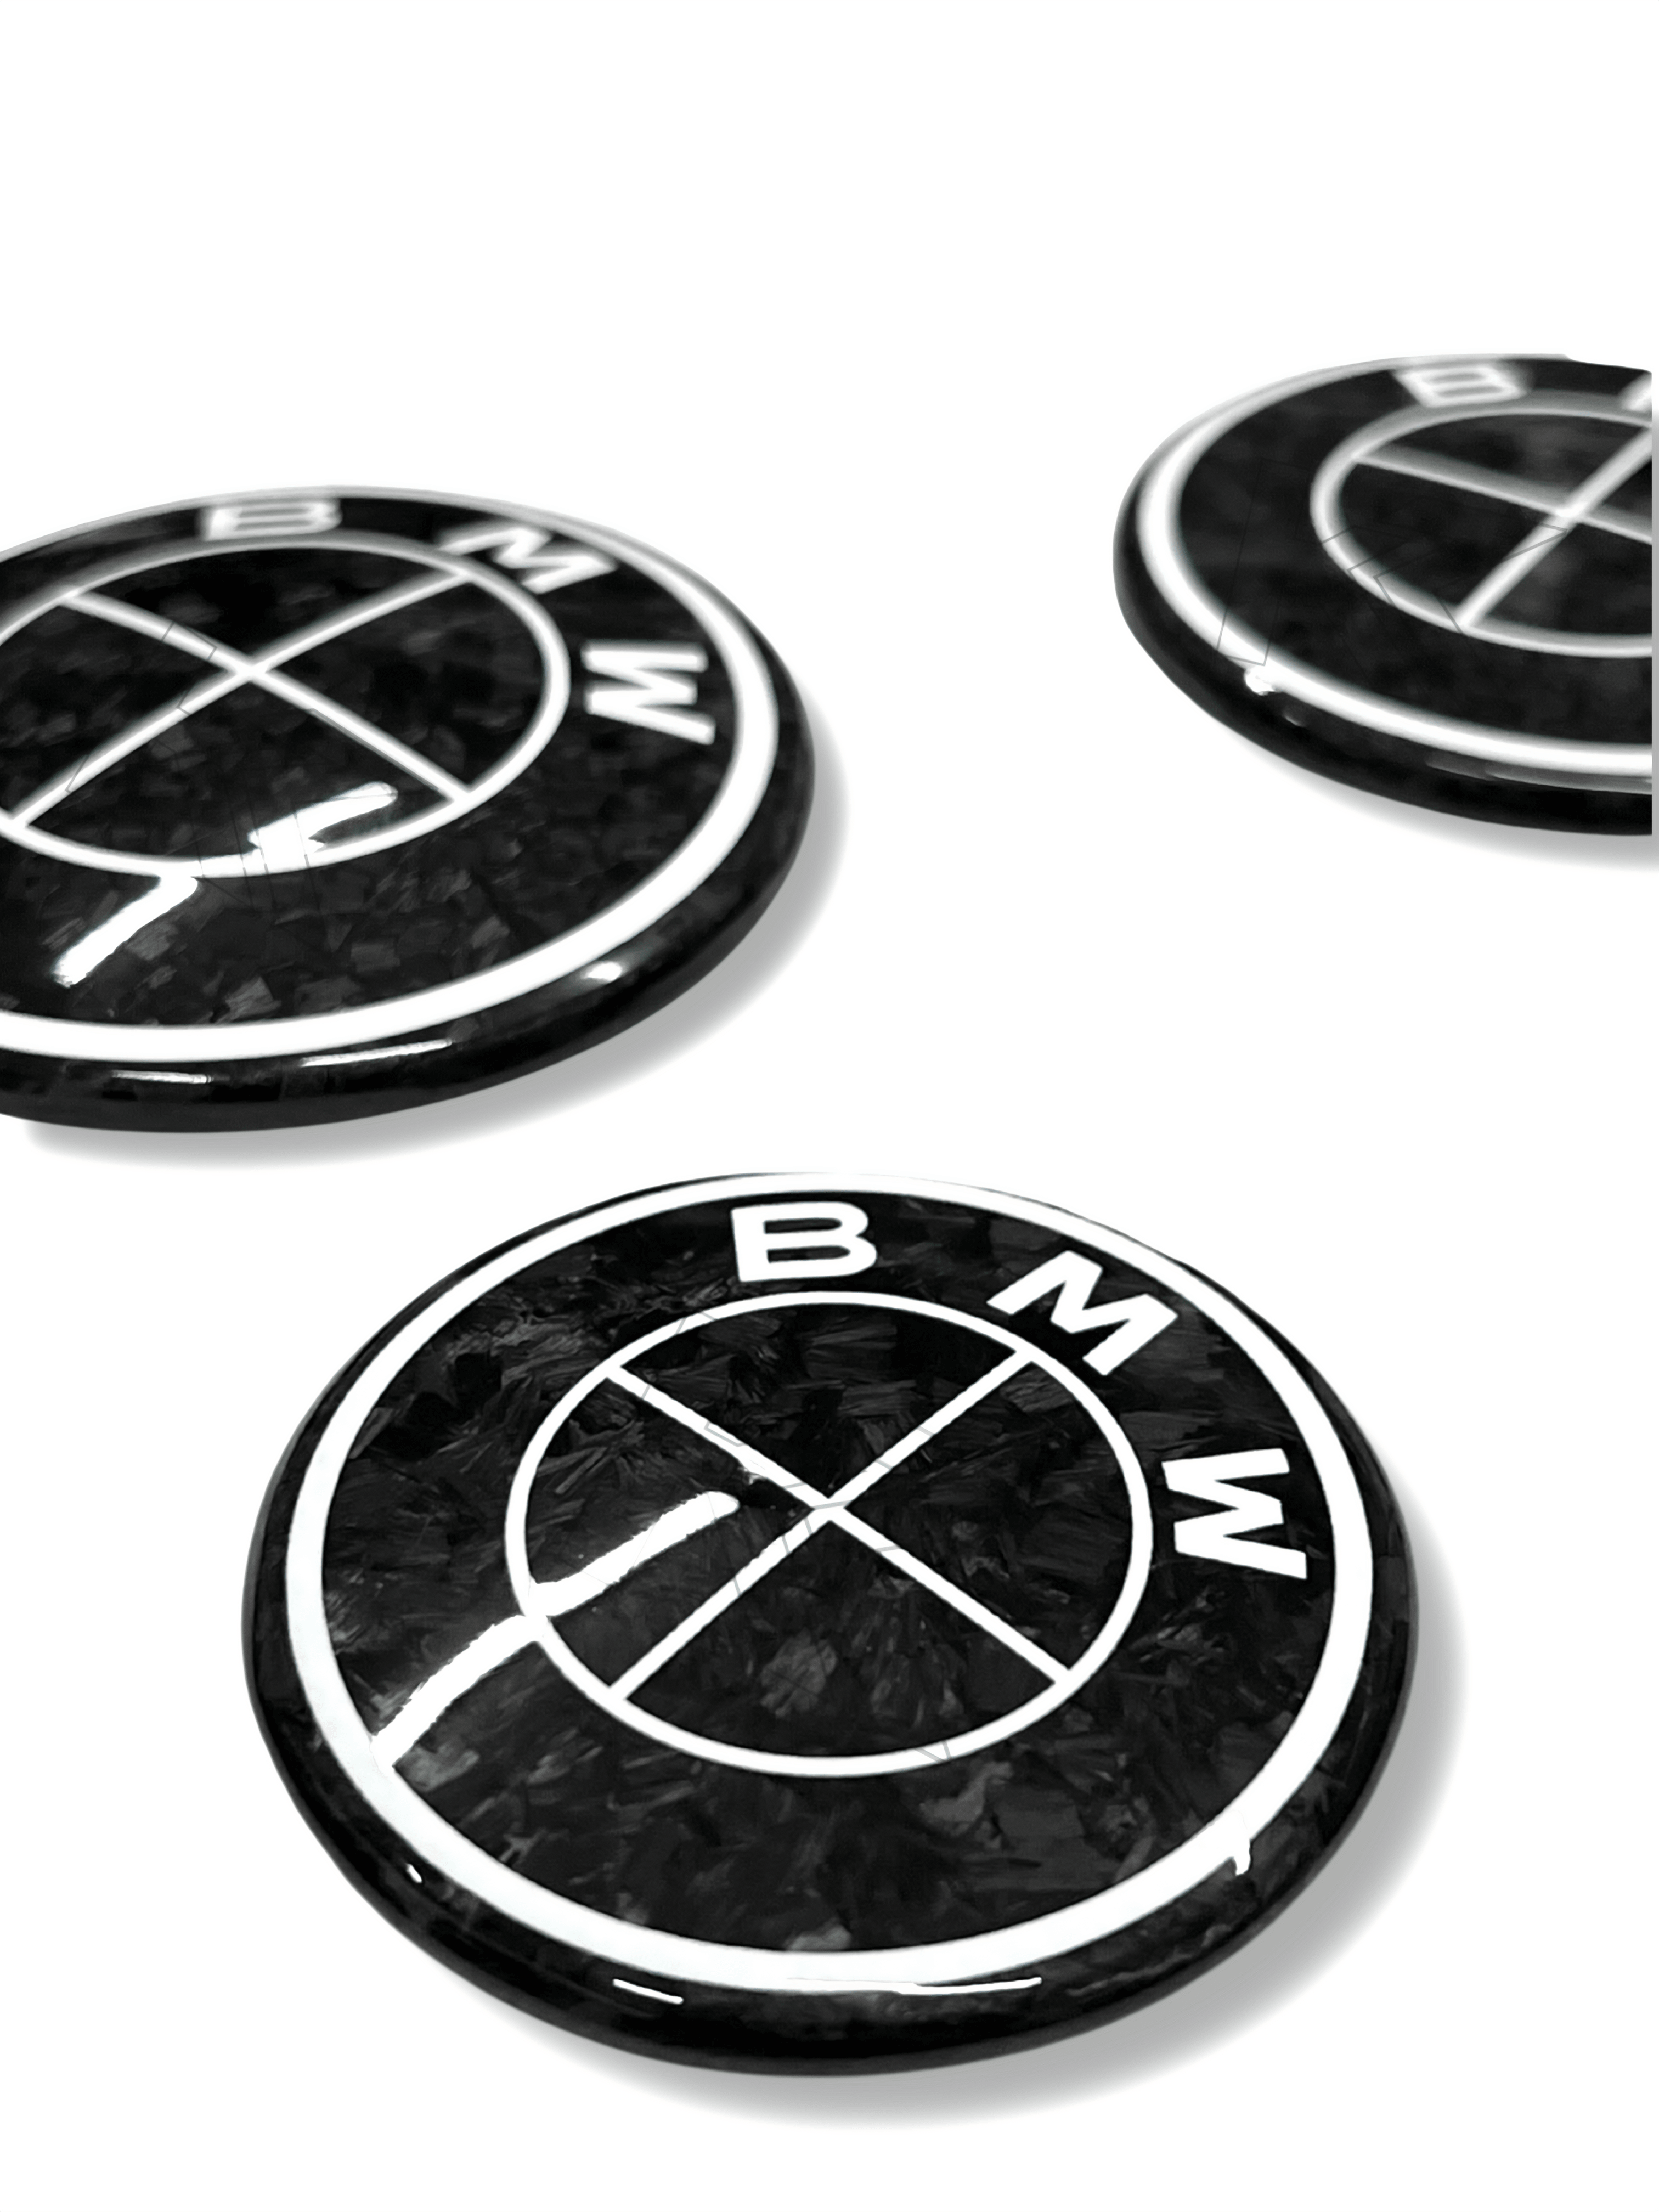 BMW Roundel Emblem Covers - Forged Carbon Style Emblem - K2 Industries